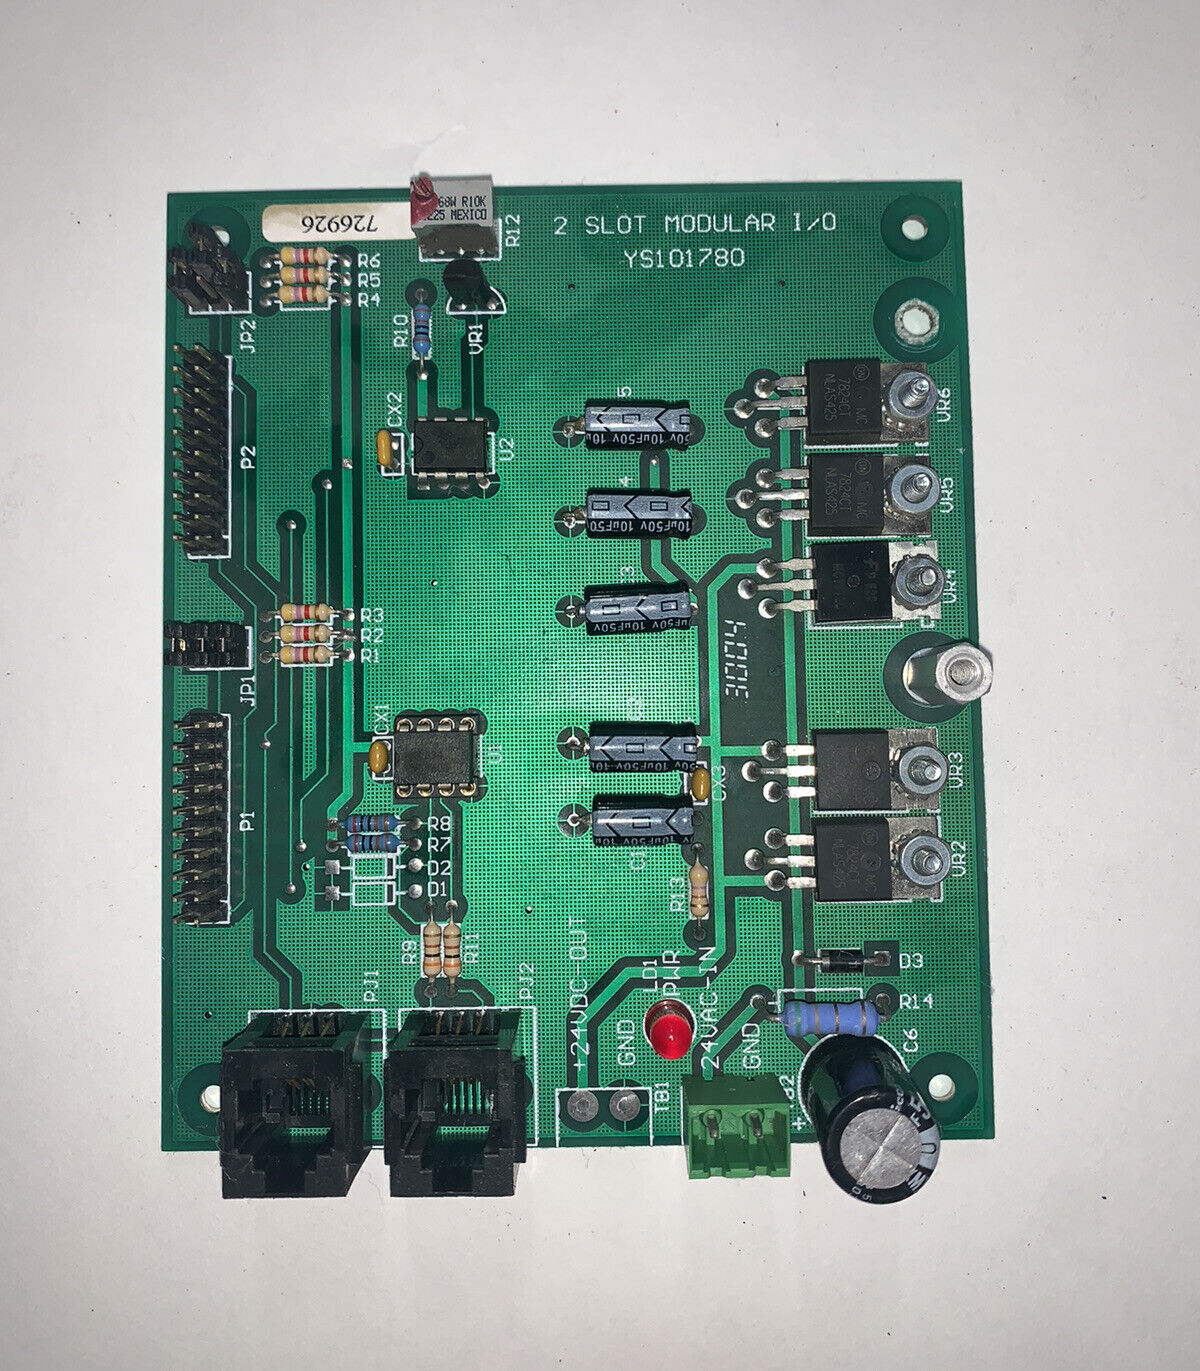 AAON Incorporated P87930 2 Slot Modular I/O Sub Base Board - WattMaster YS101780